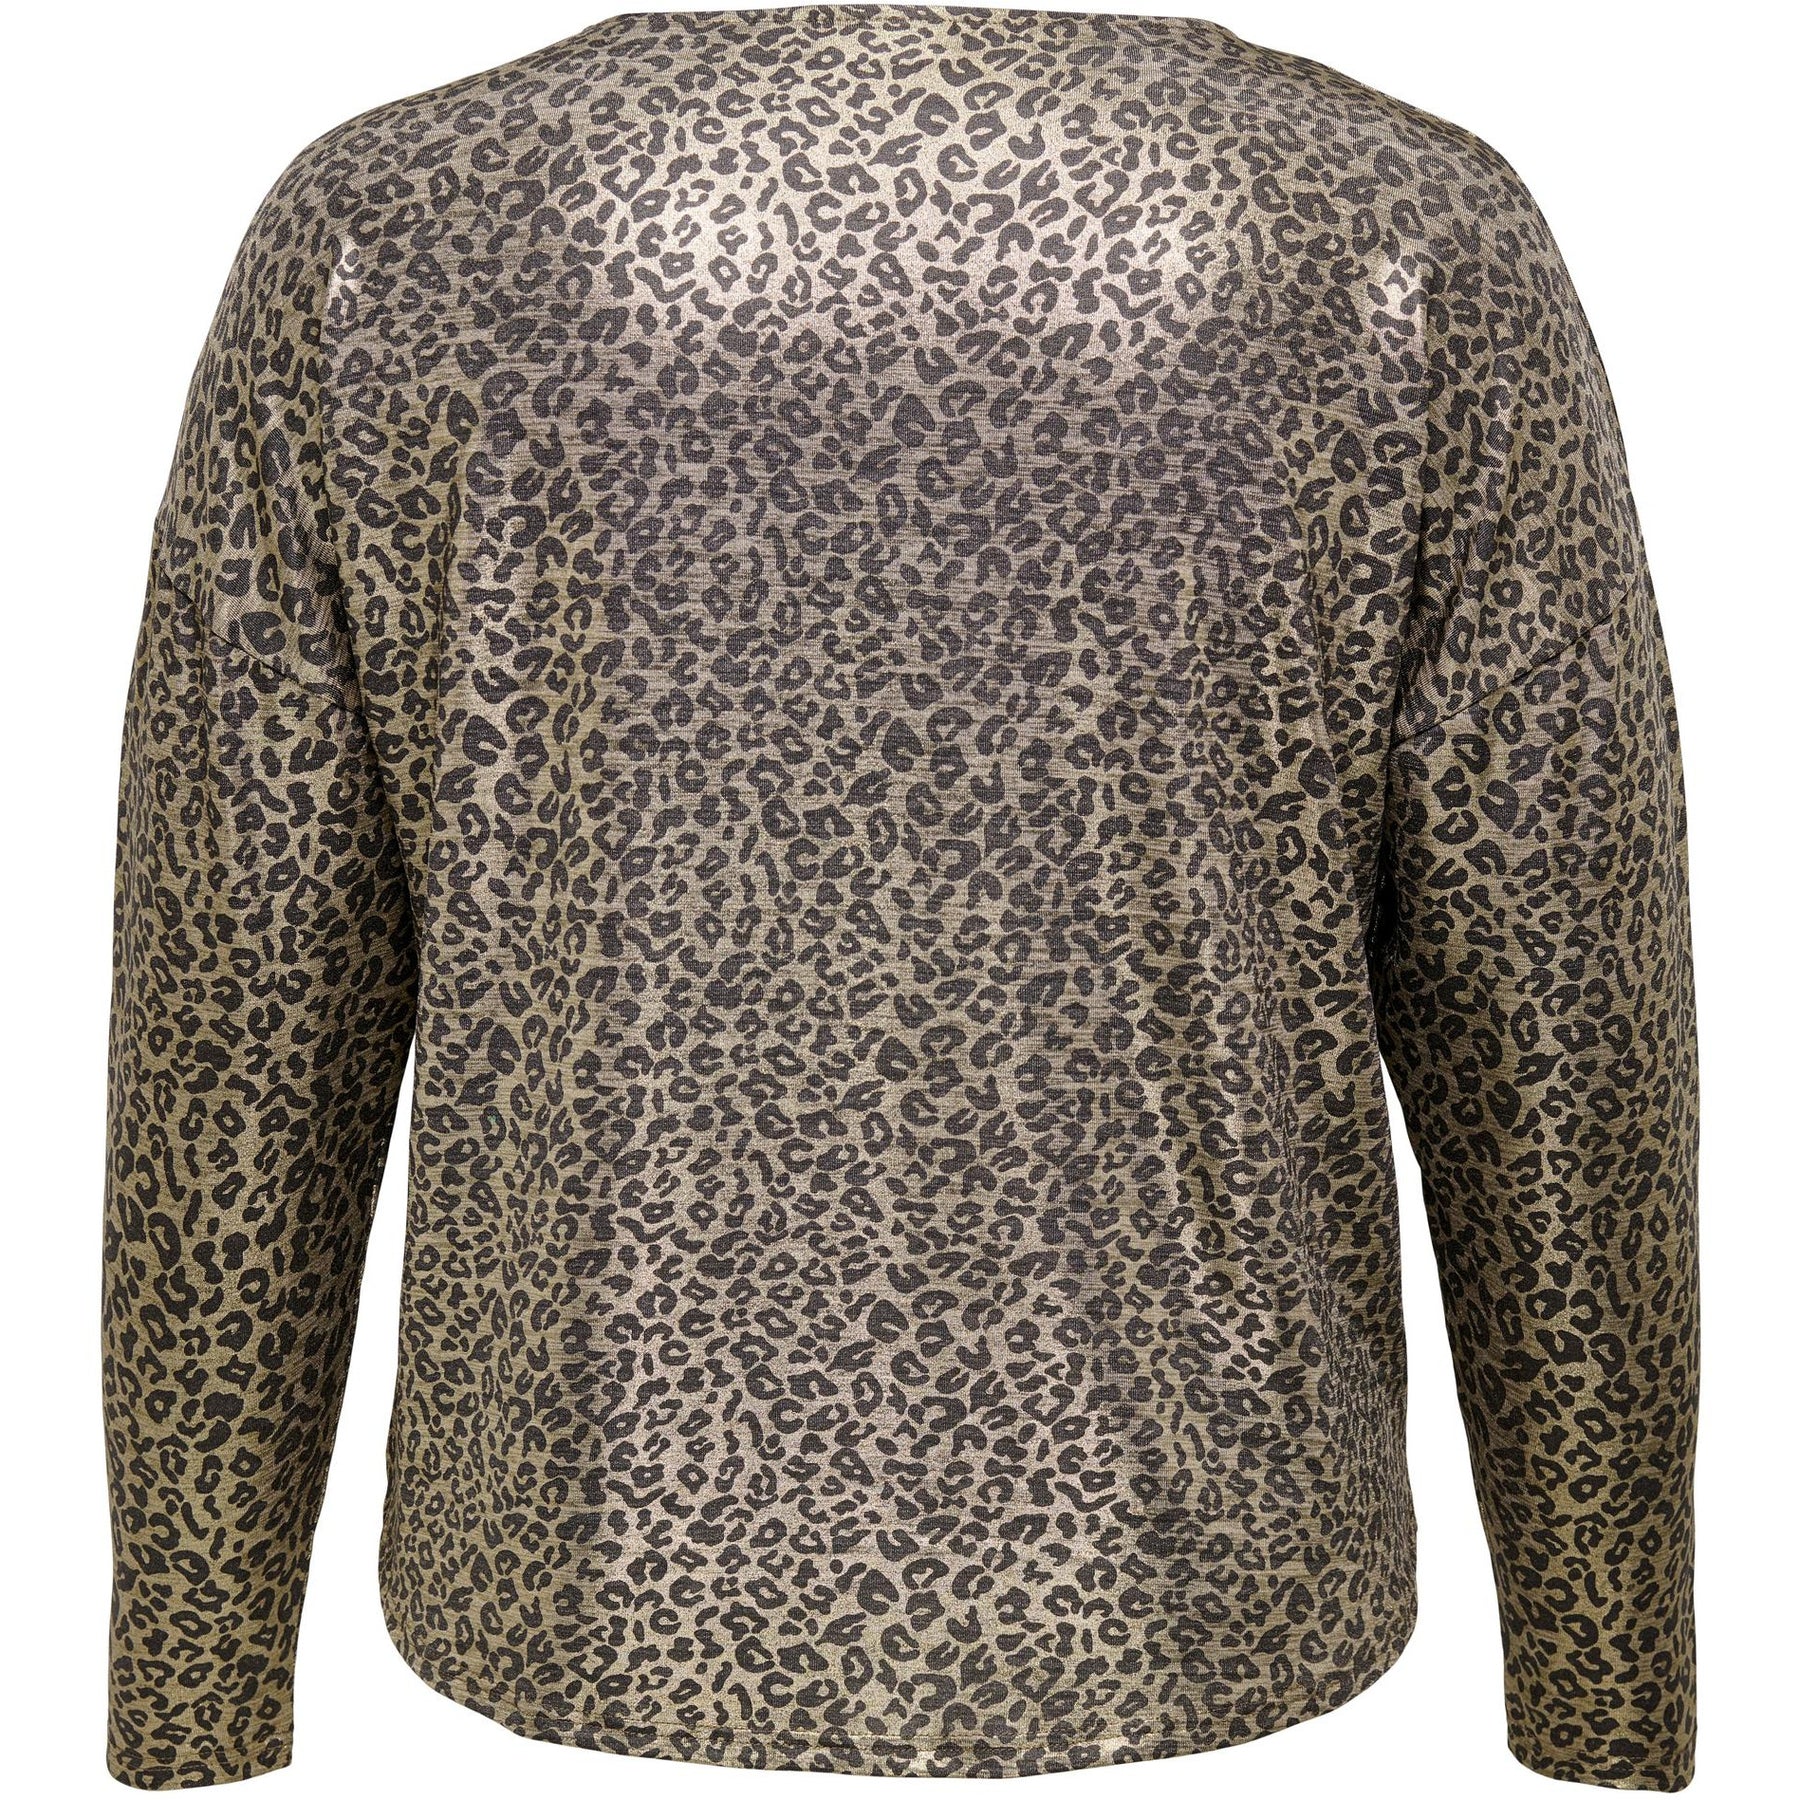 Only Carmakoma Leopard Shine Top - Wardrobe Plus